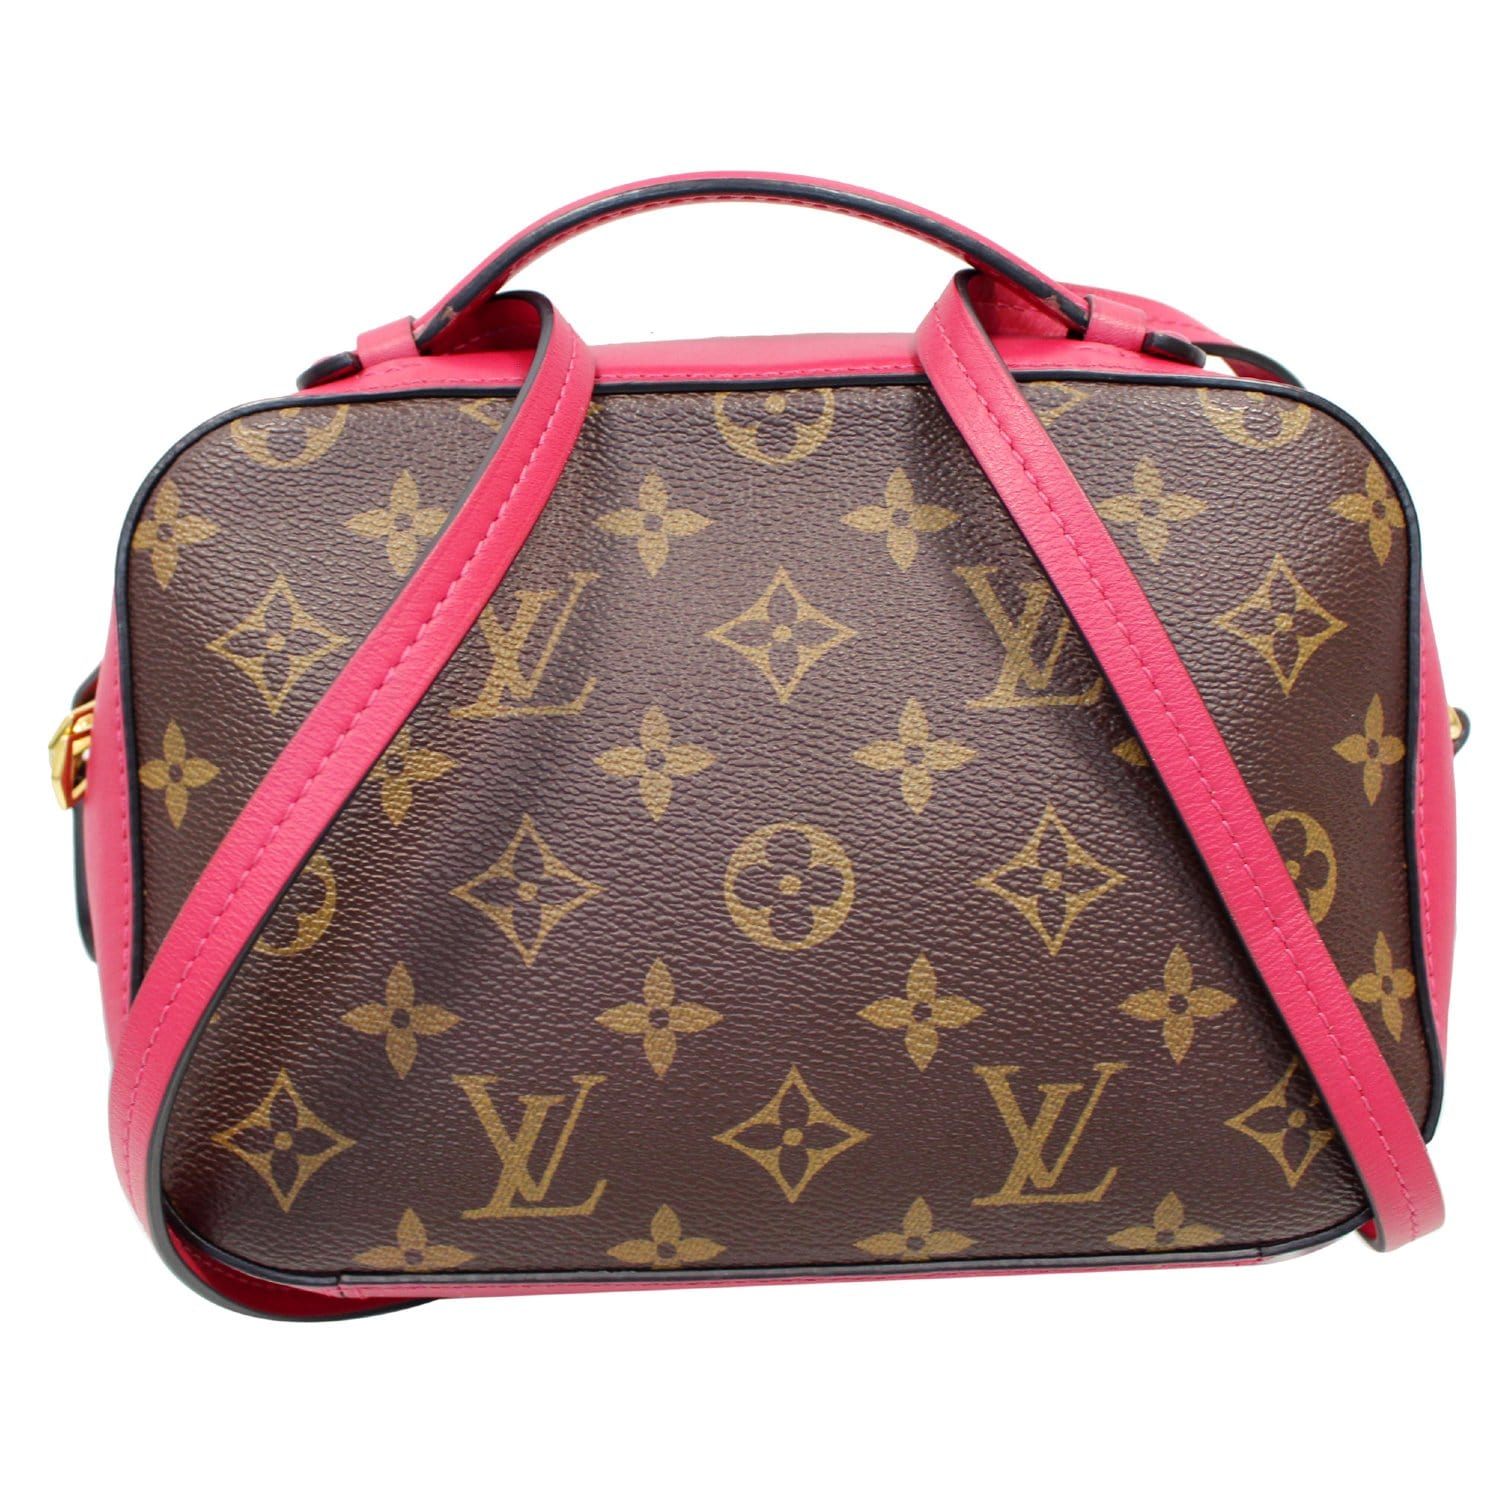 Bags, Louis Vuitton Saintonge Bag